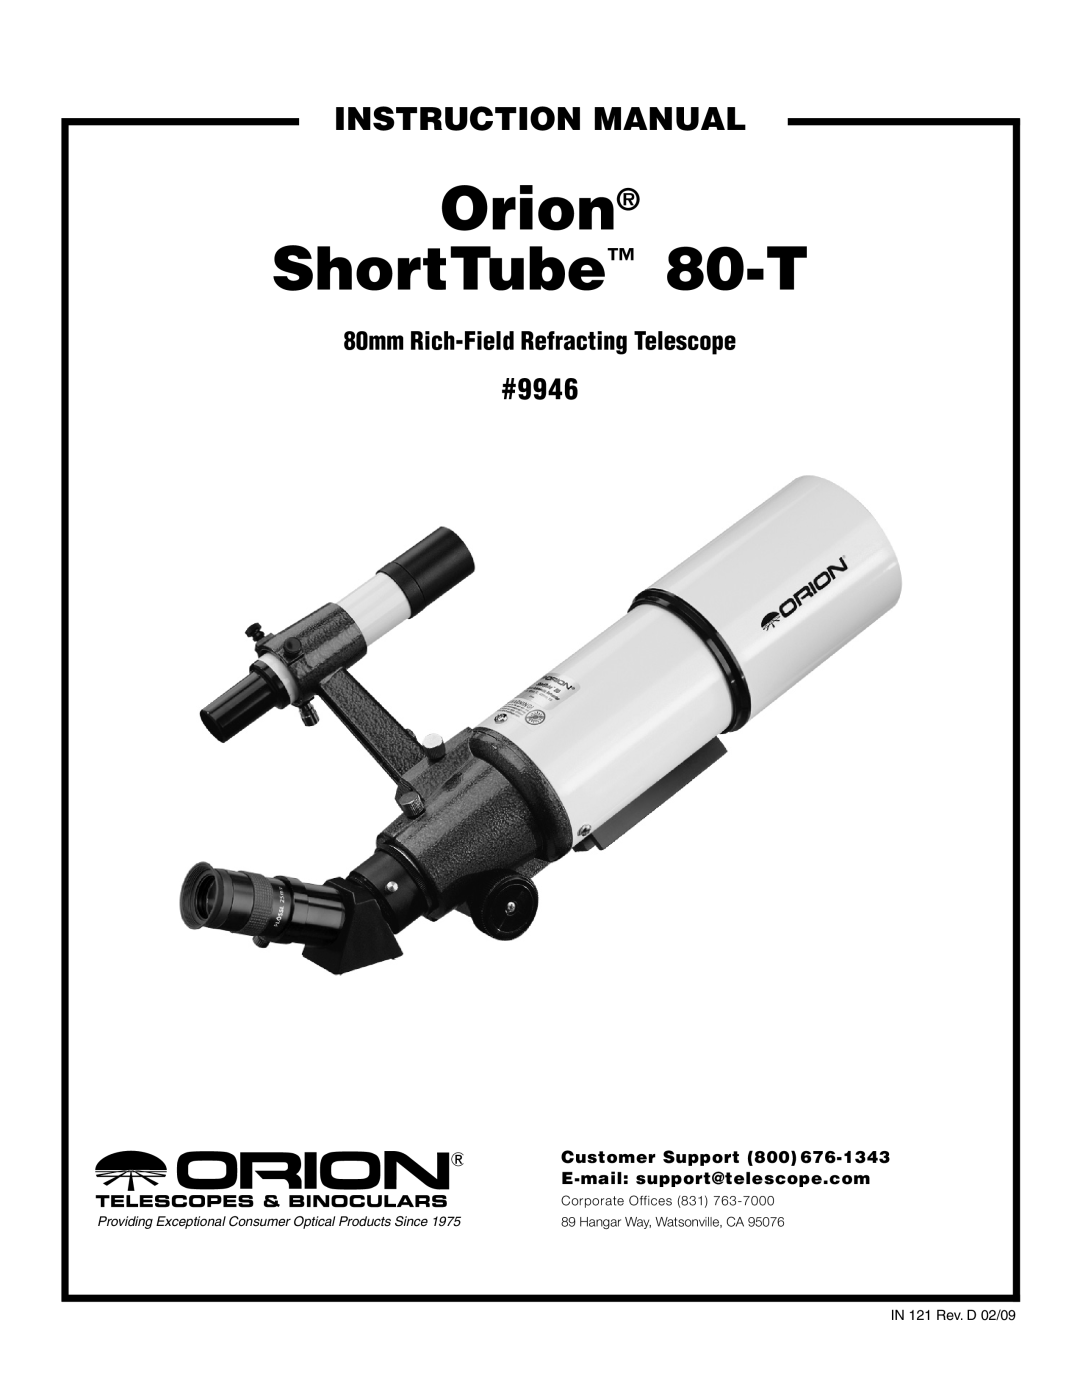 Orion instruction manual #9946, Orion ShortTube 80-T, 80mm Rich-FieldRefracting Telescope, Customer Support 